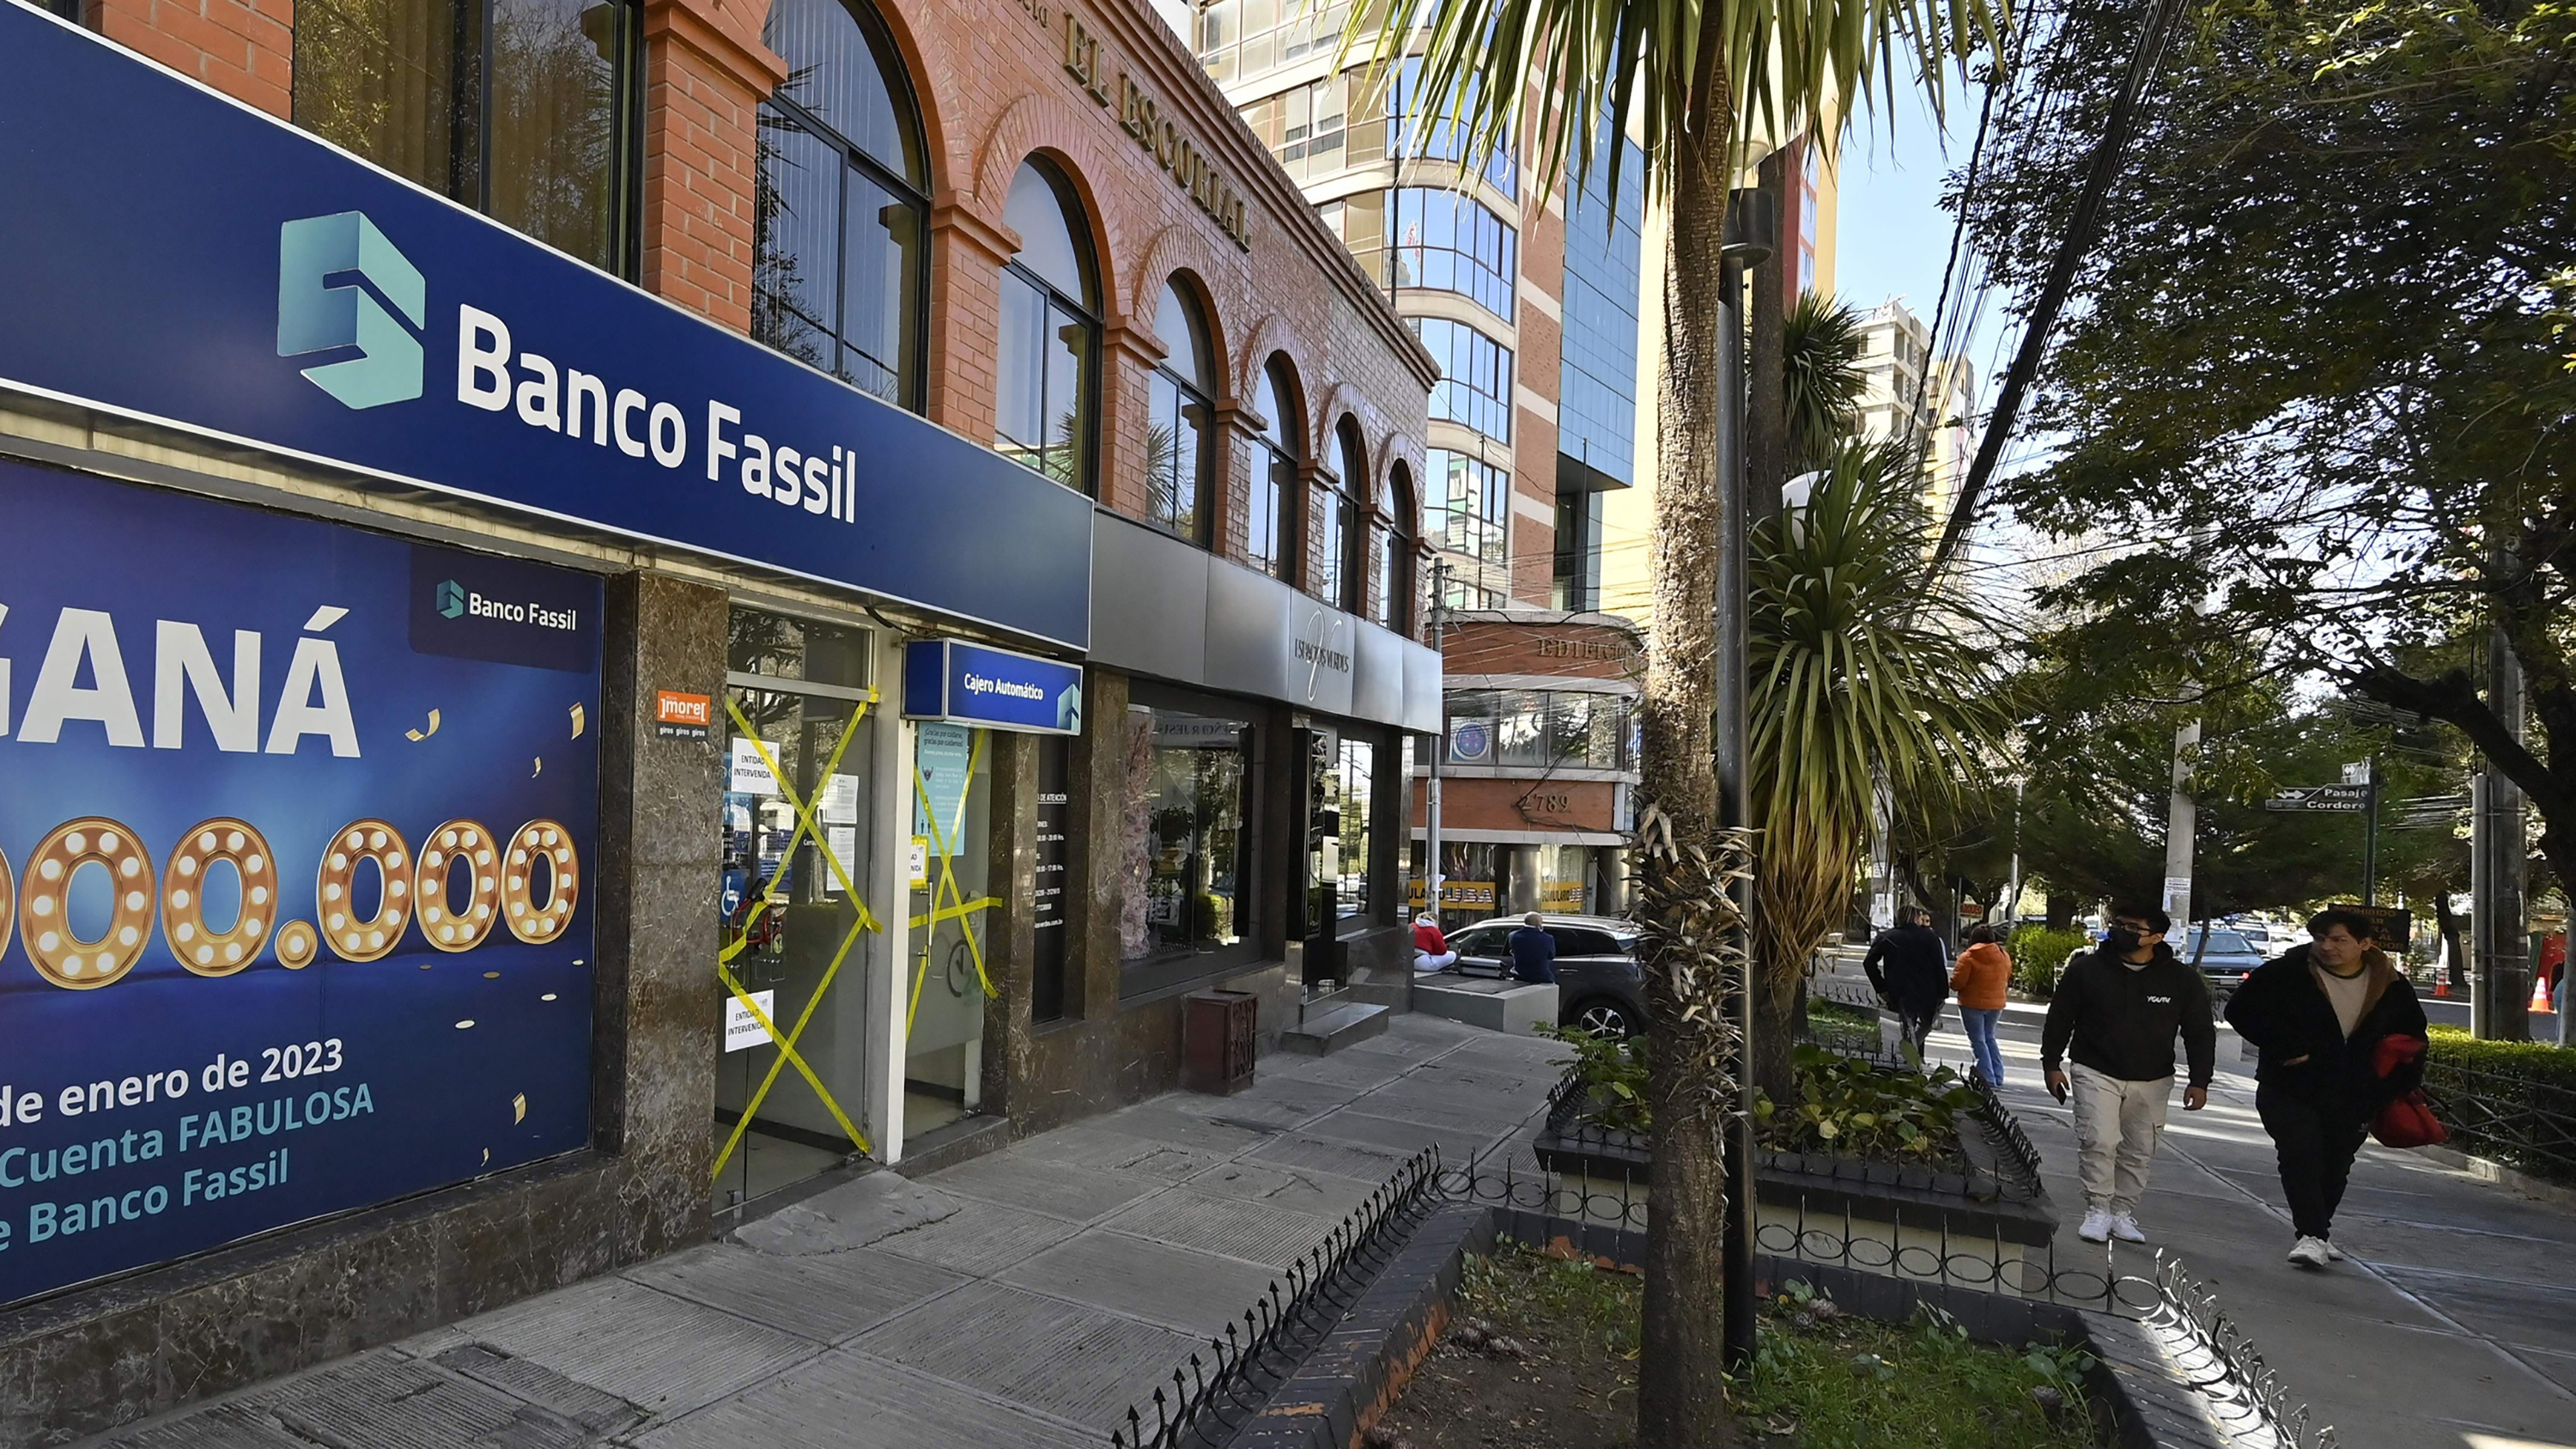 Banco Fassil branch